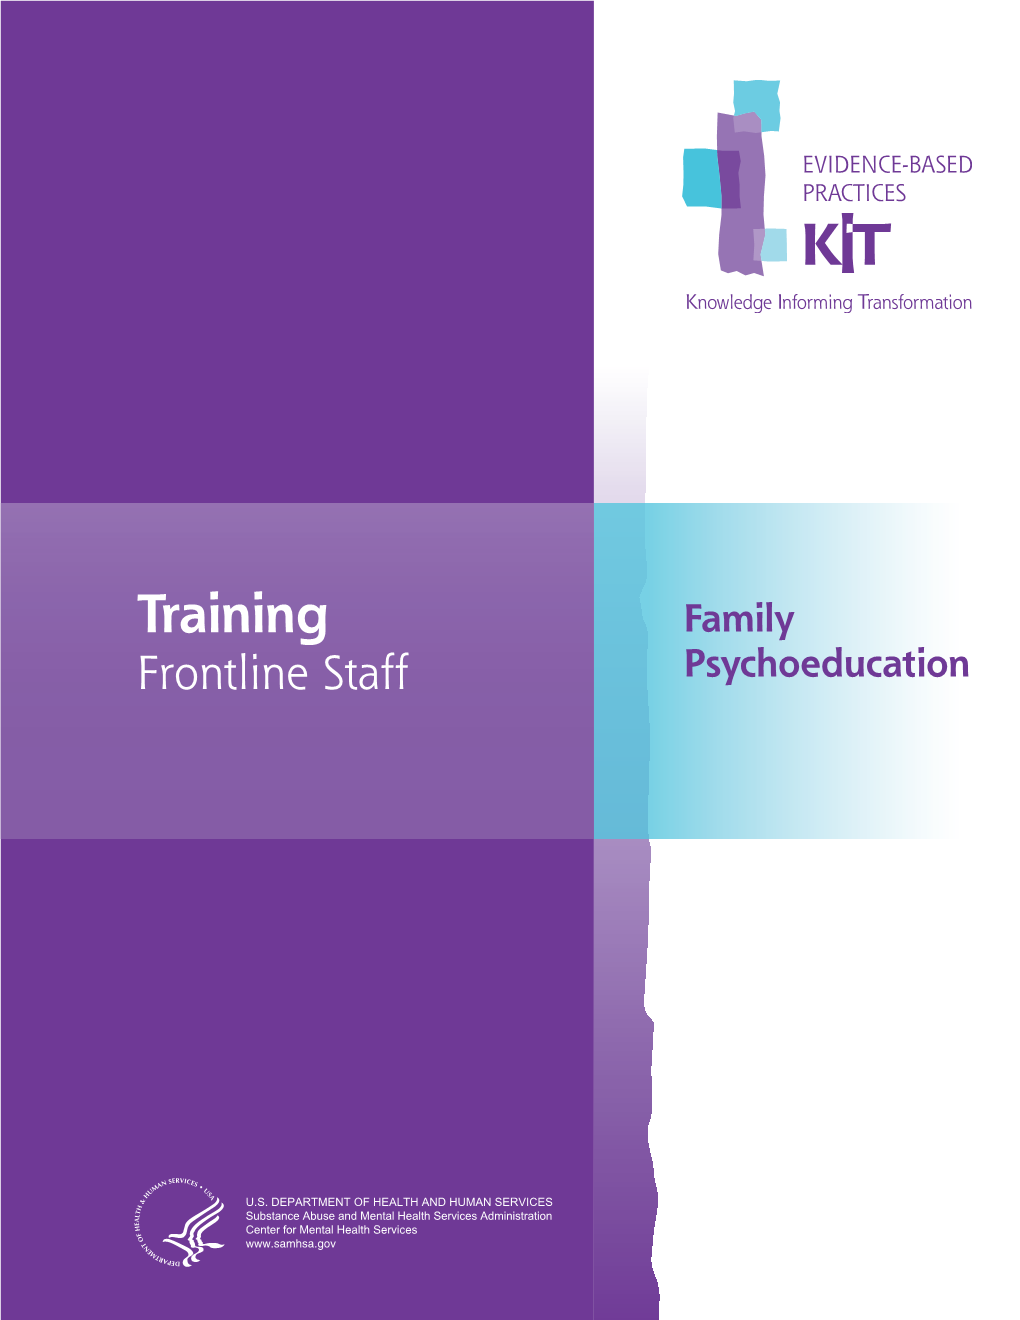 Family Psychoeducation: Training Frontline Staff